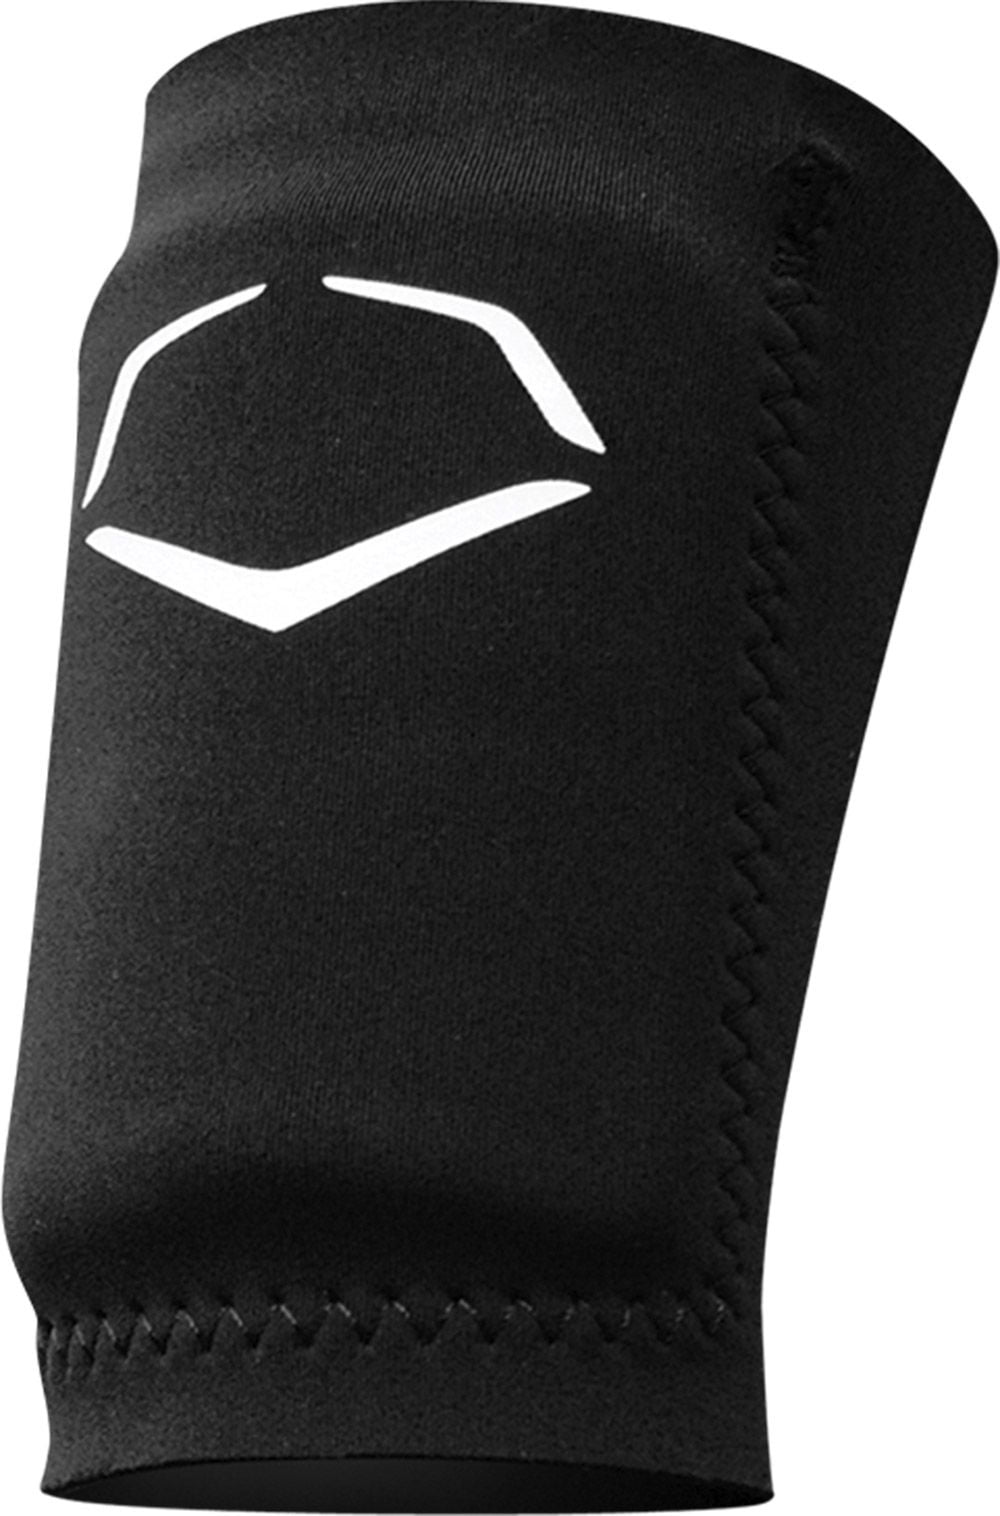 EvoShield Adult Solid Batters Protective Wrist Guard S, Black